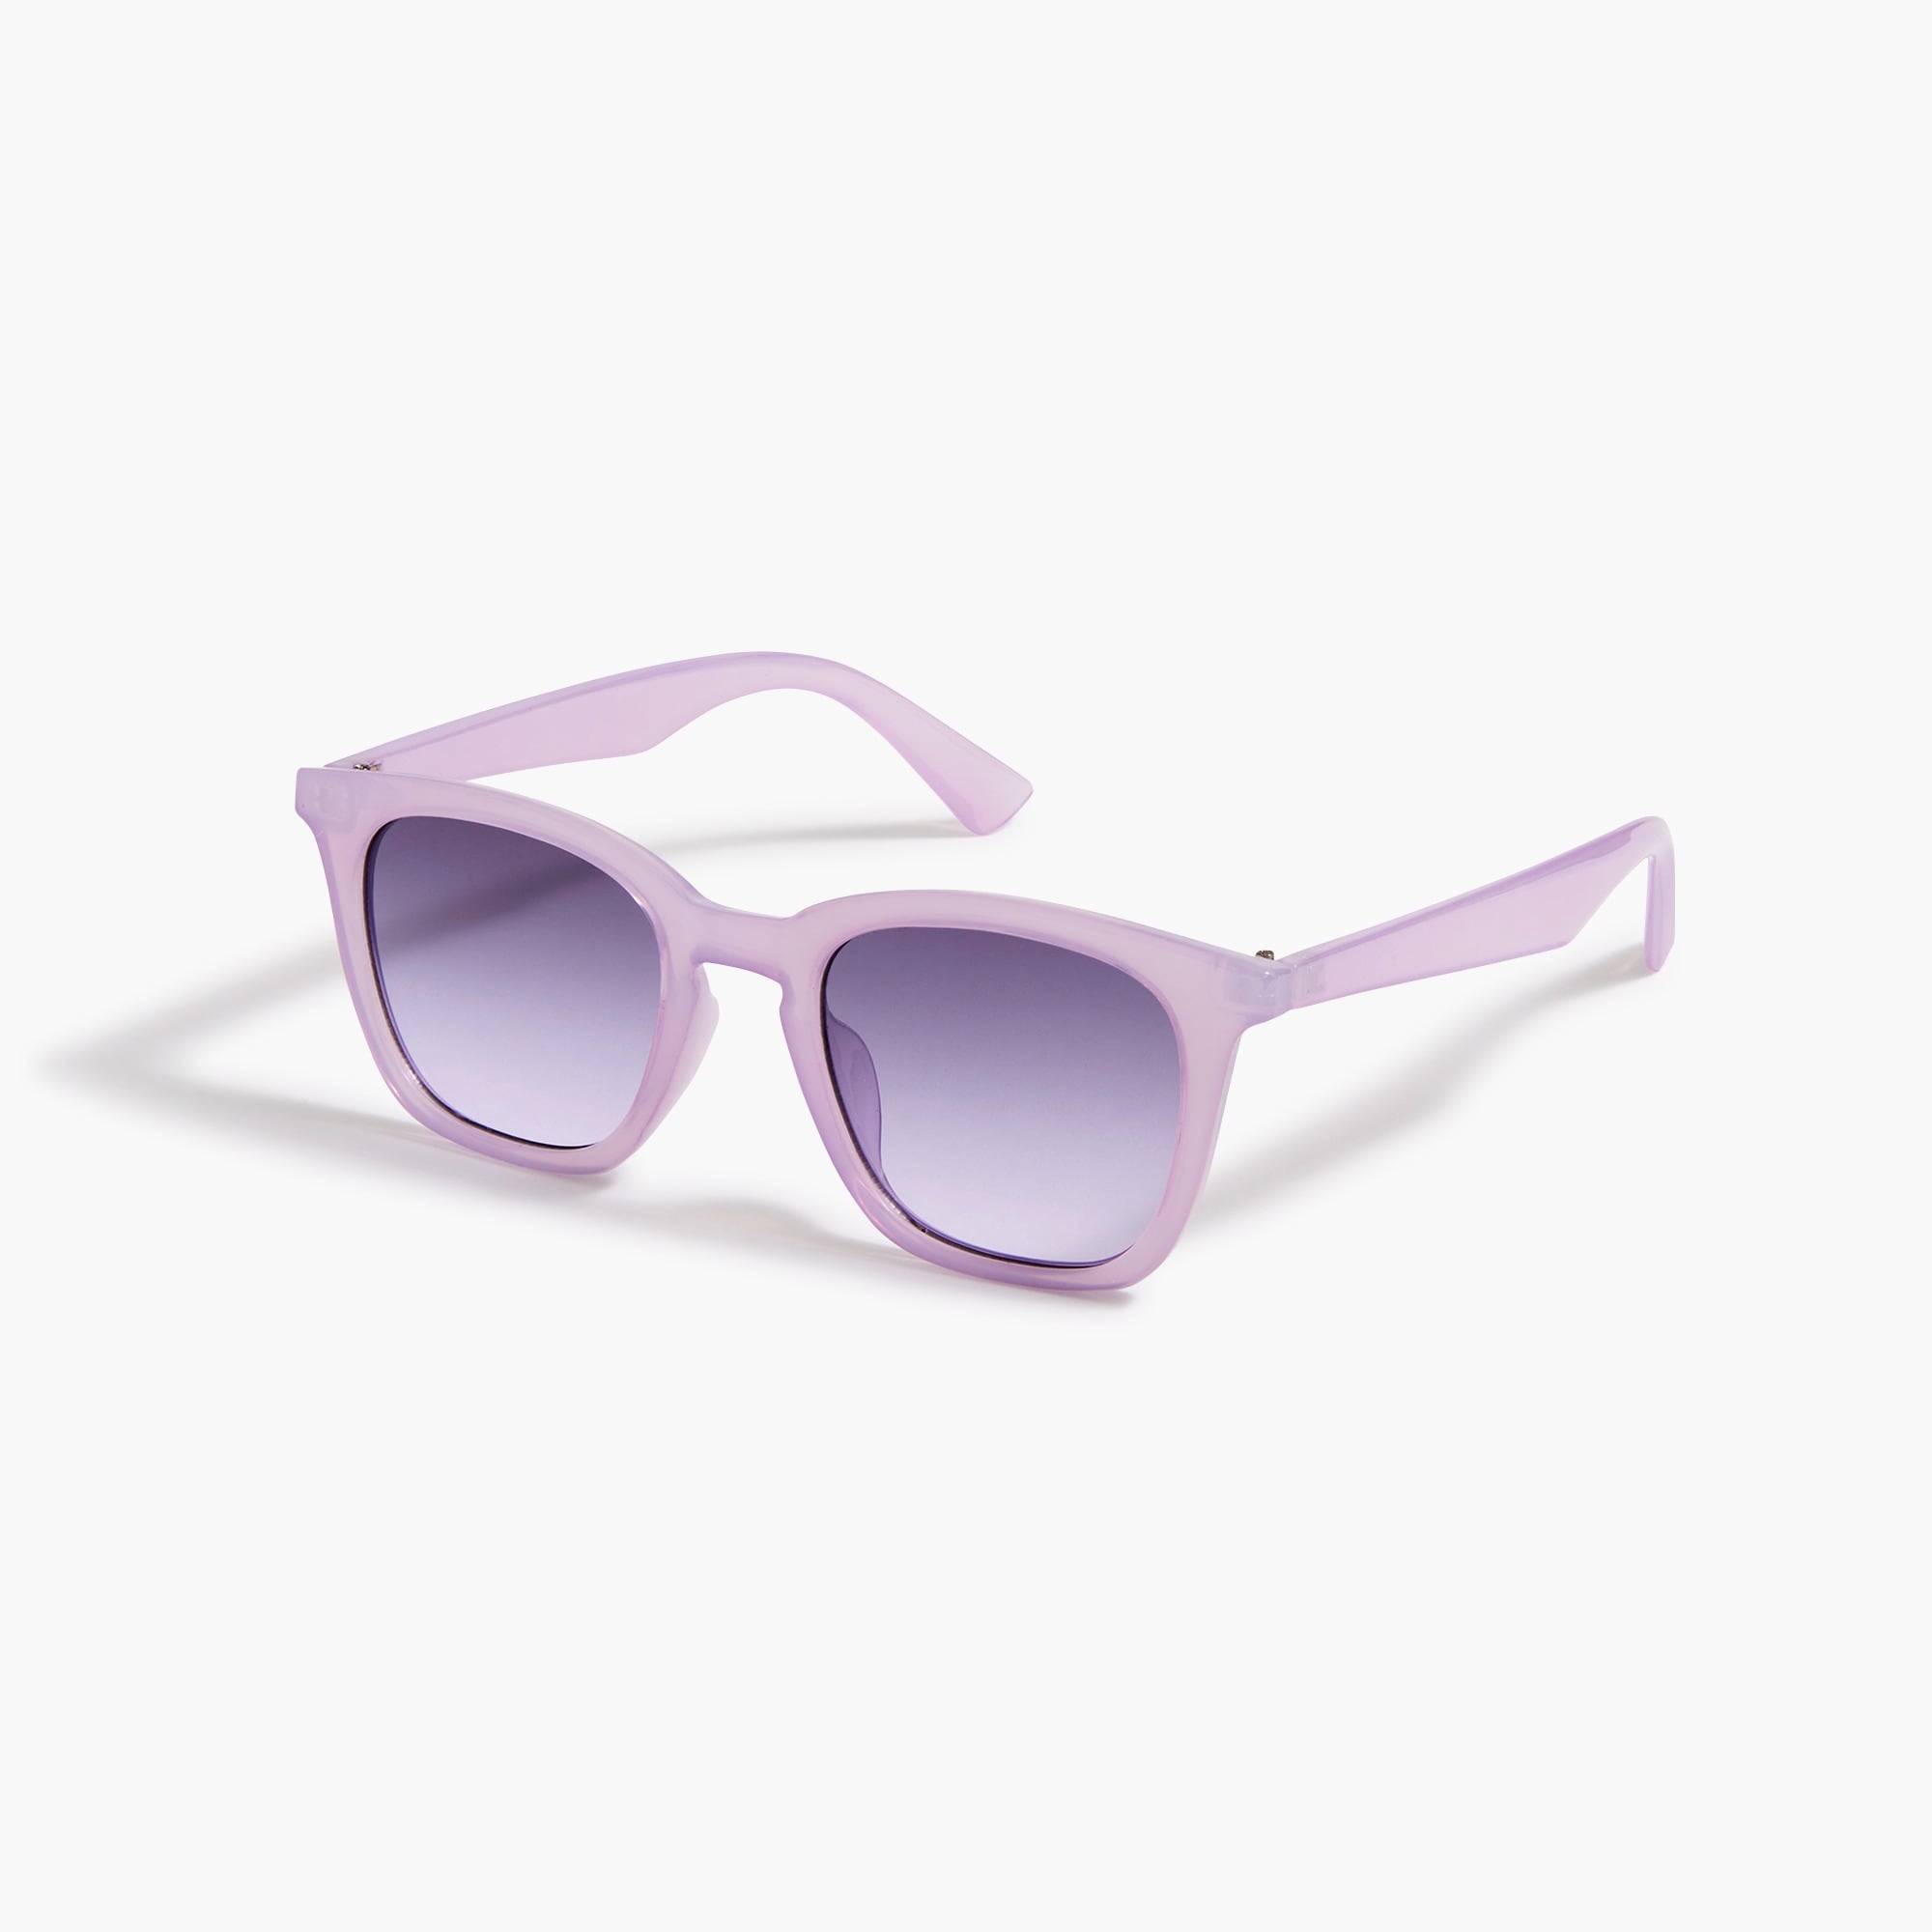 Jcrew Square-frame sunglasses